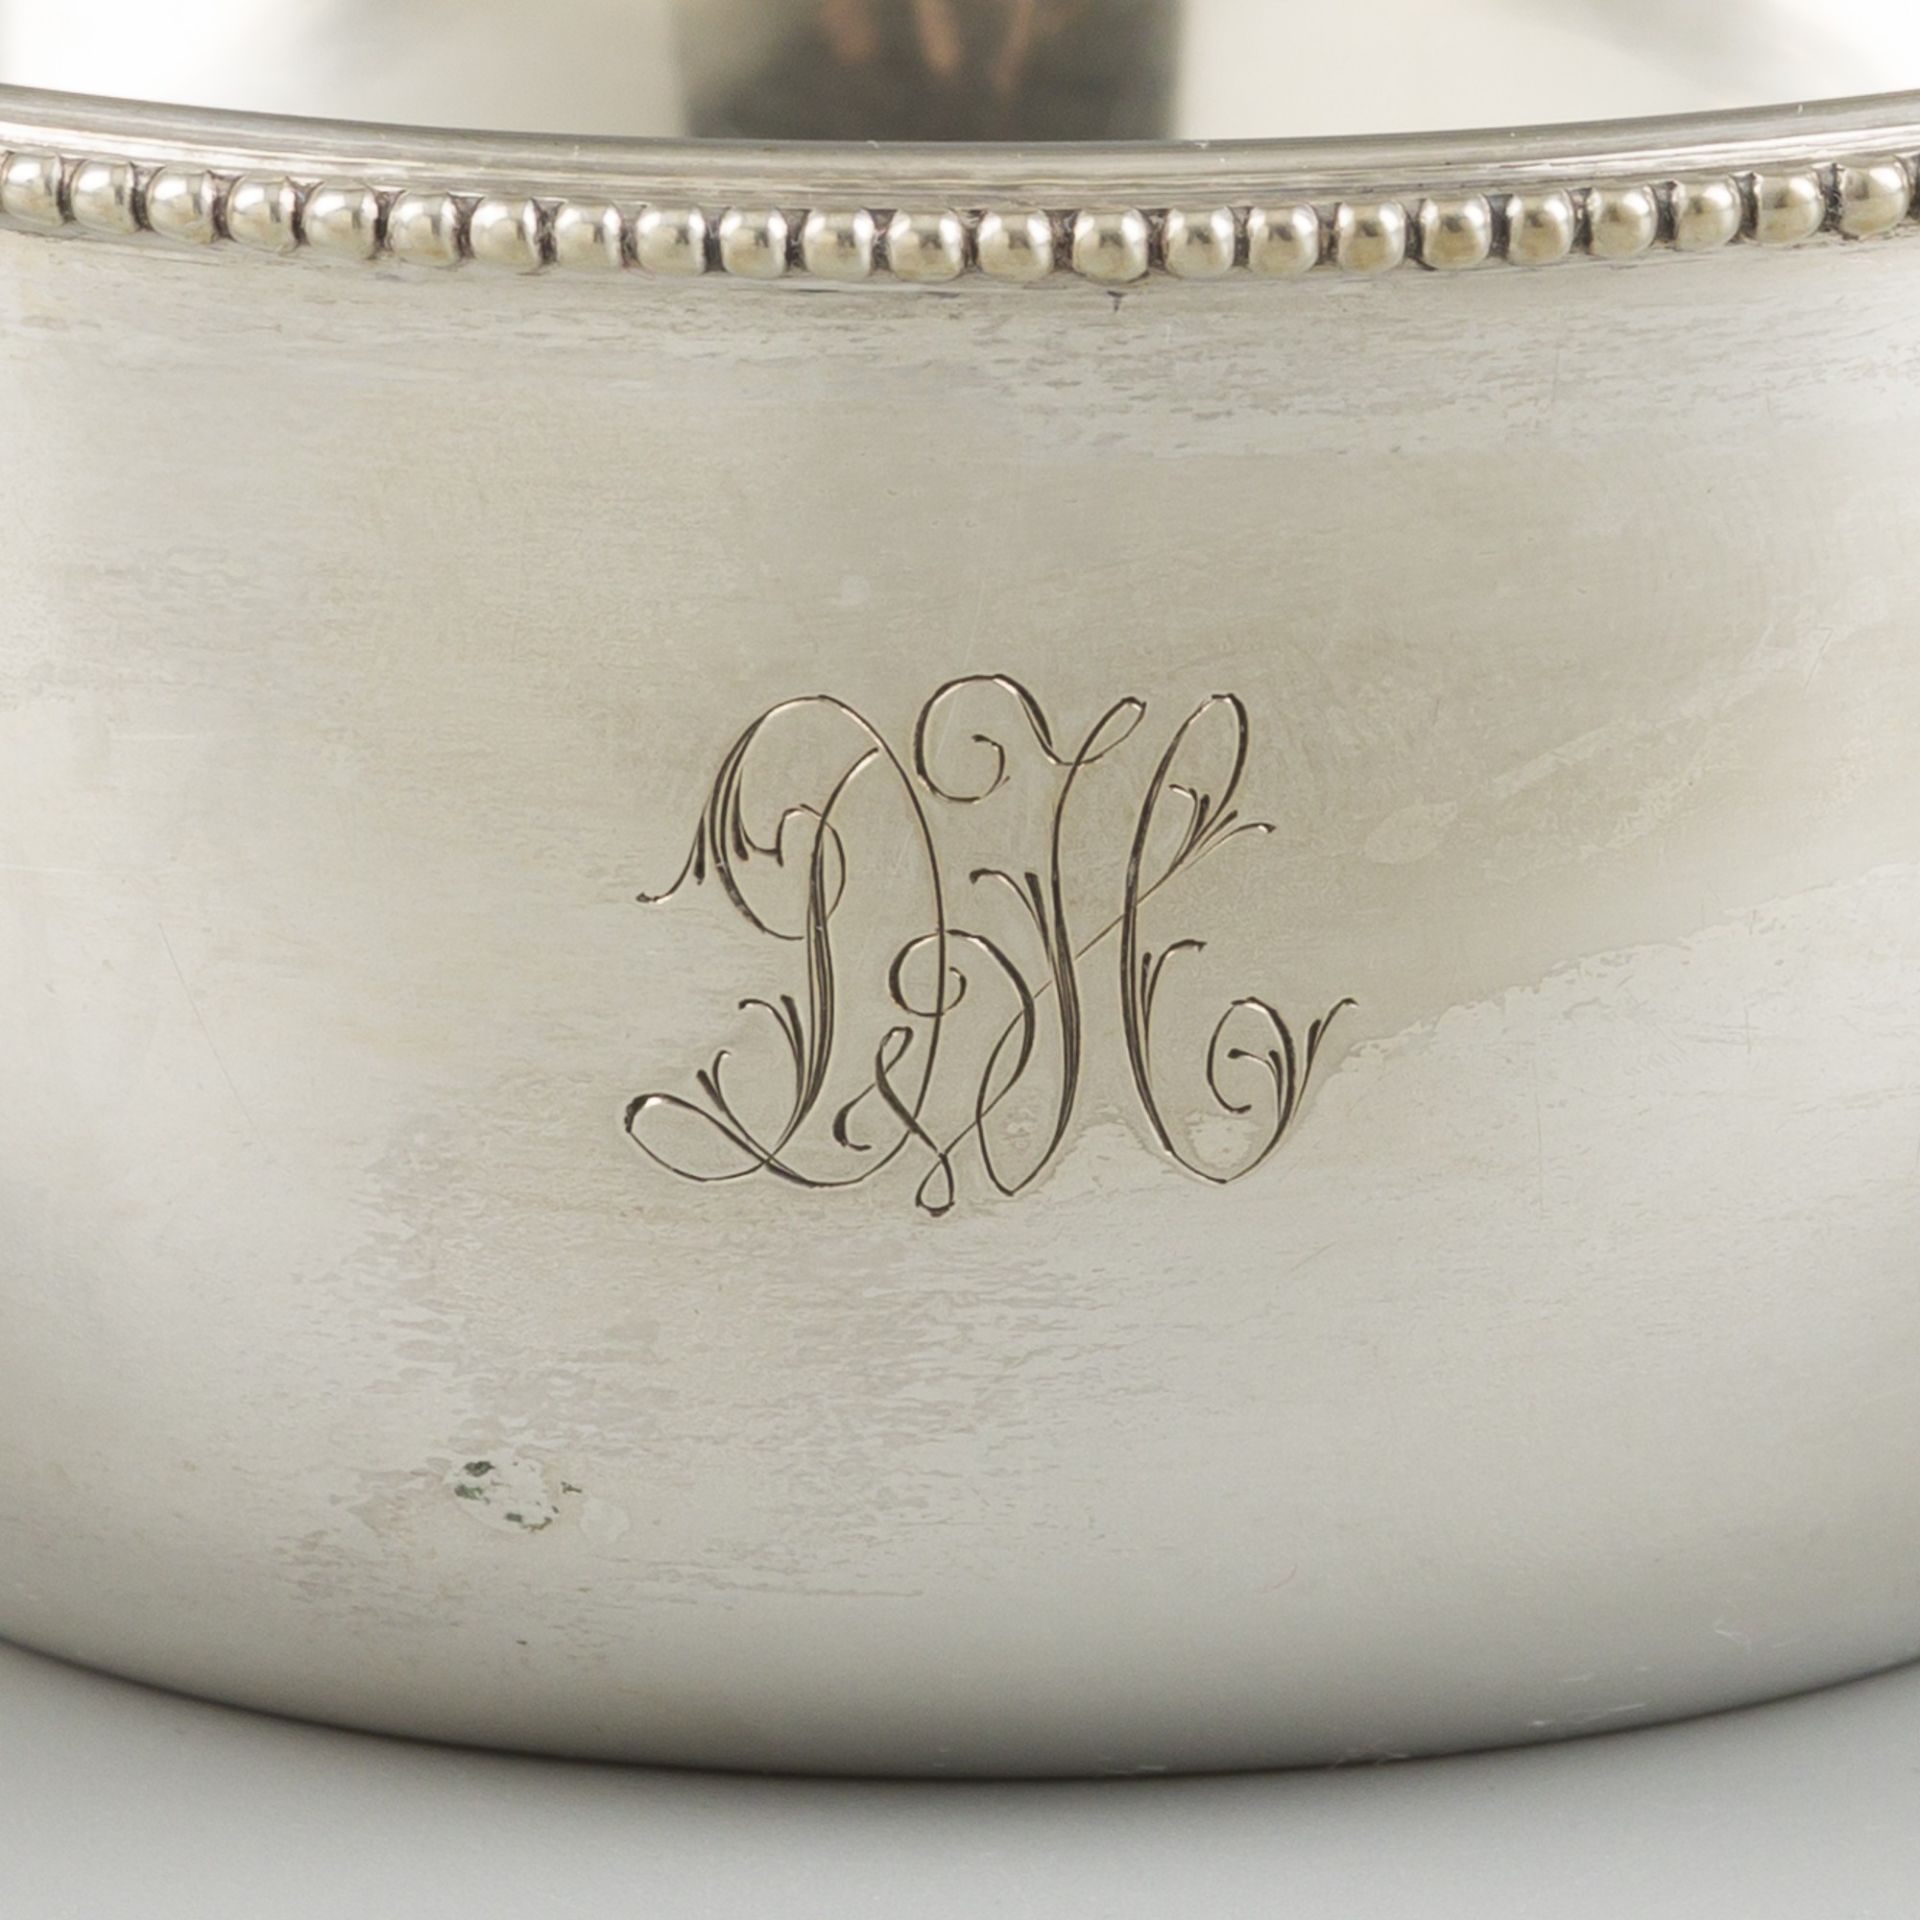 6-piece set of finger bowls silver. - Image 5 of 6